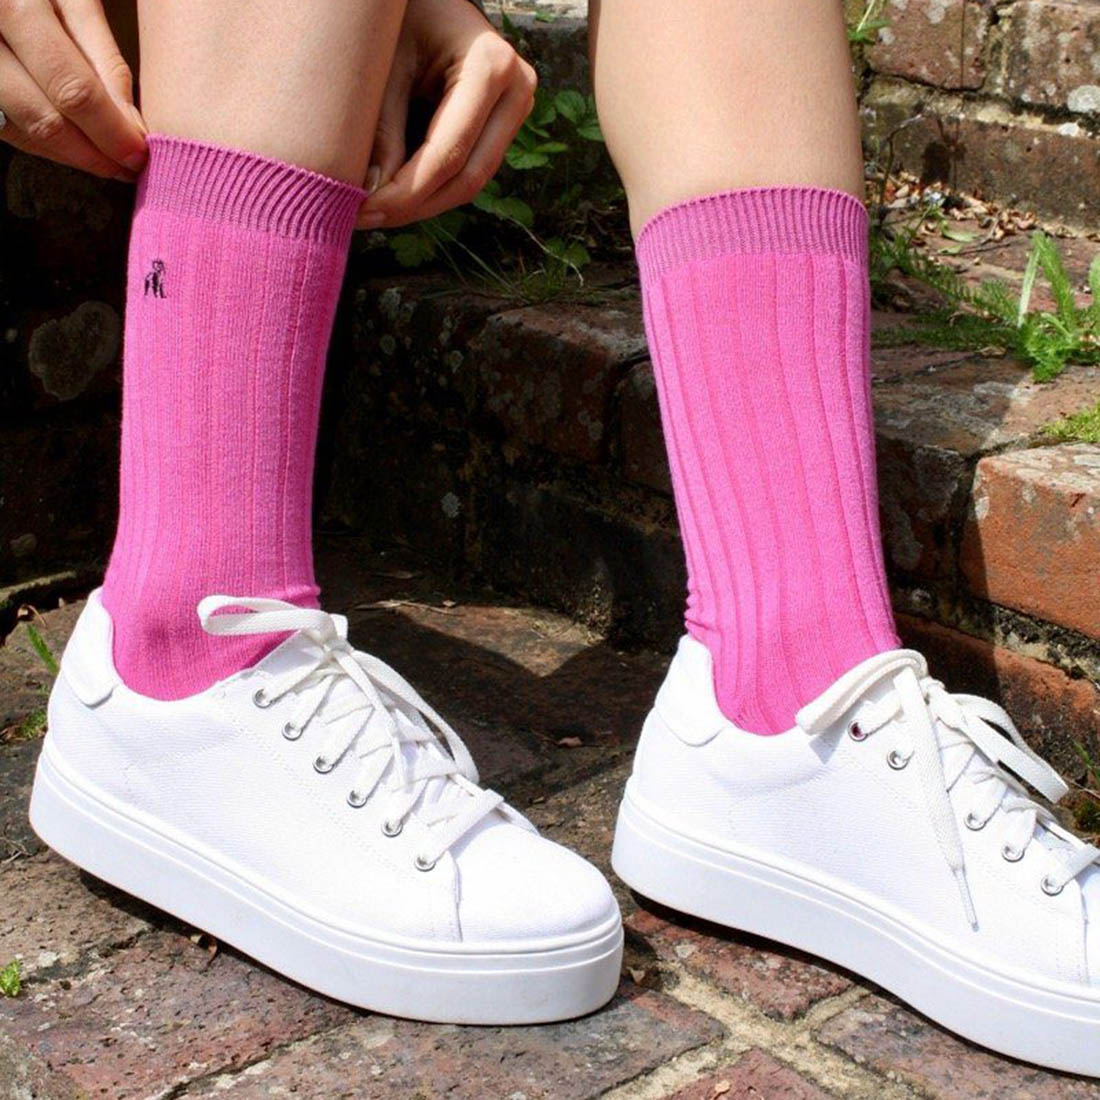 socks-rich-pink-bamboo-socks-2_128fd1b7-b4e8-4d1f-a1a2-4801119f151a.jpg